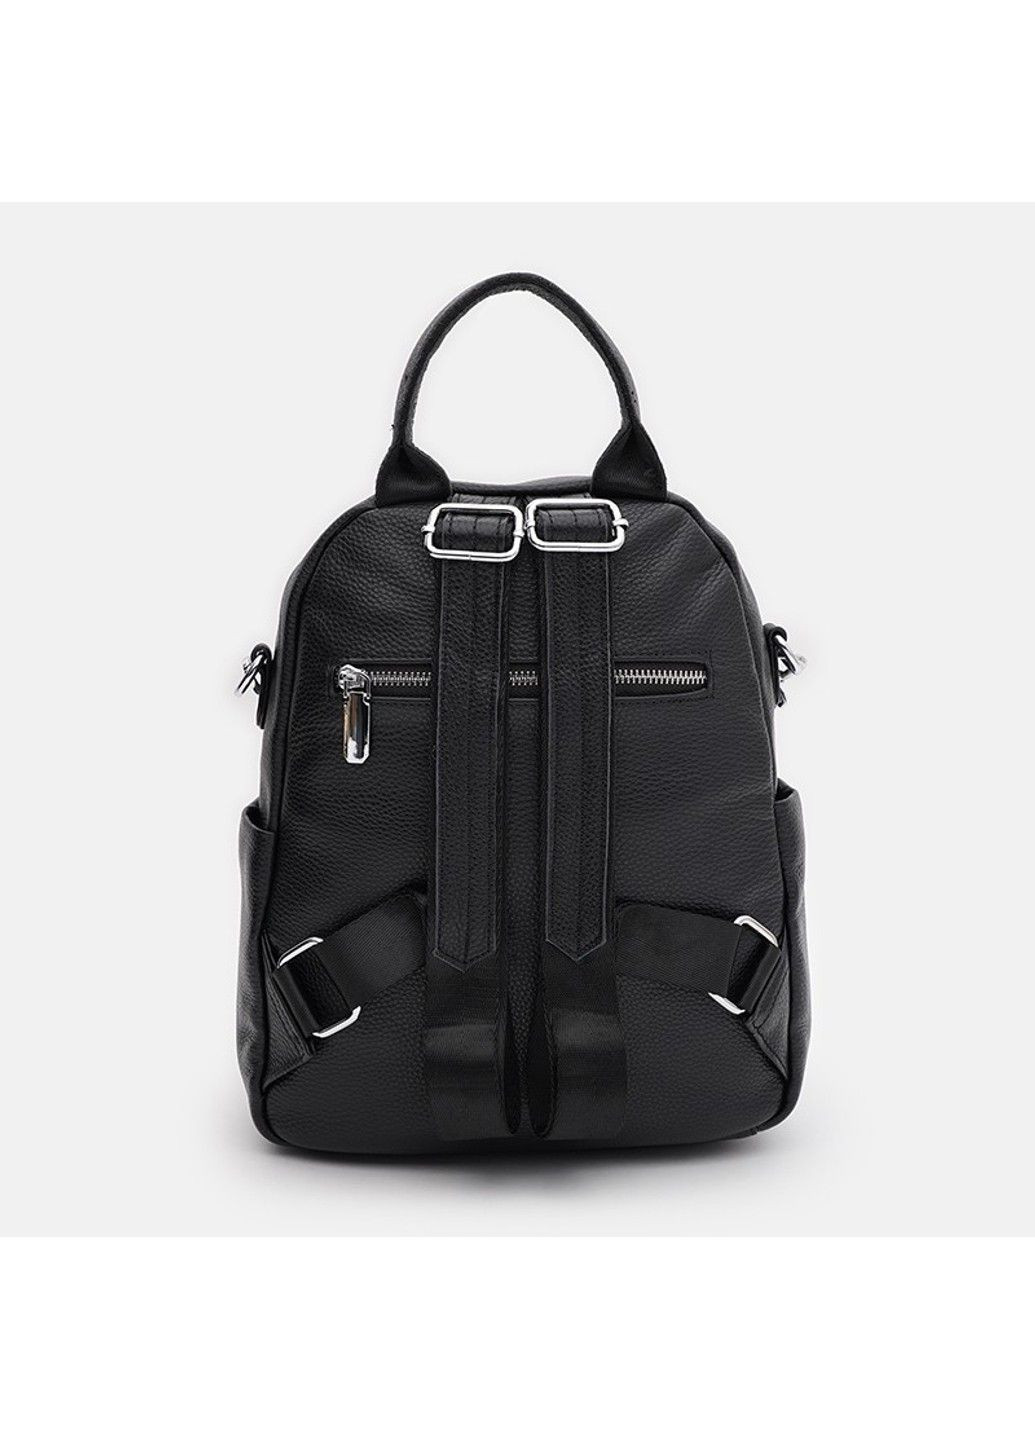 Женский кожаный рюкзак K108125bl-black Keizer (291683163)